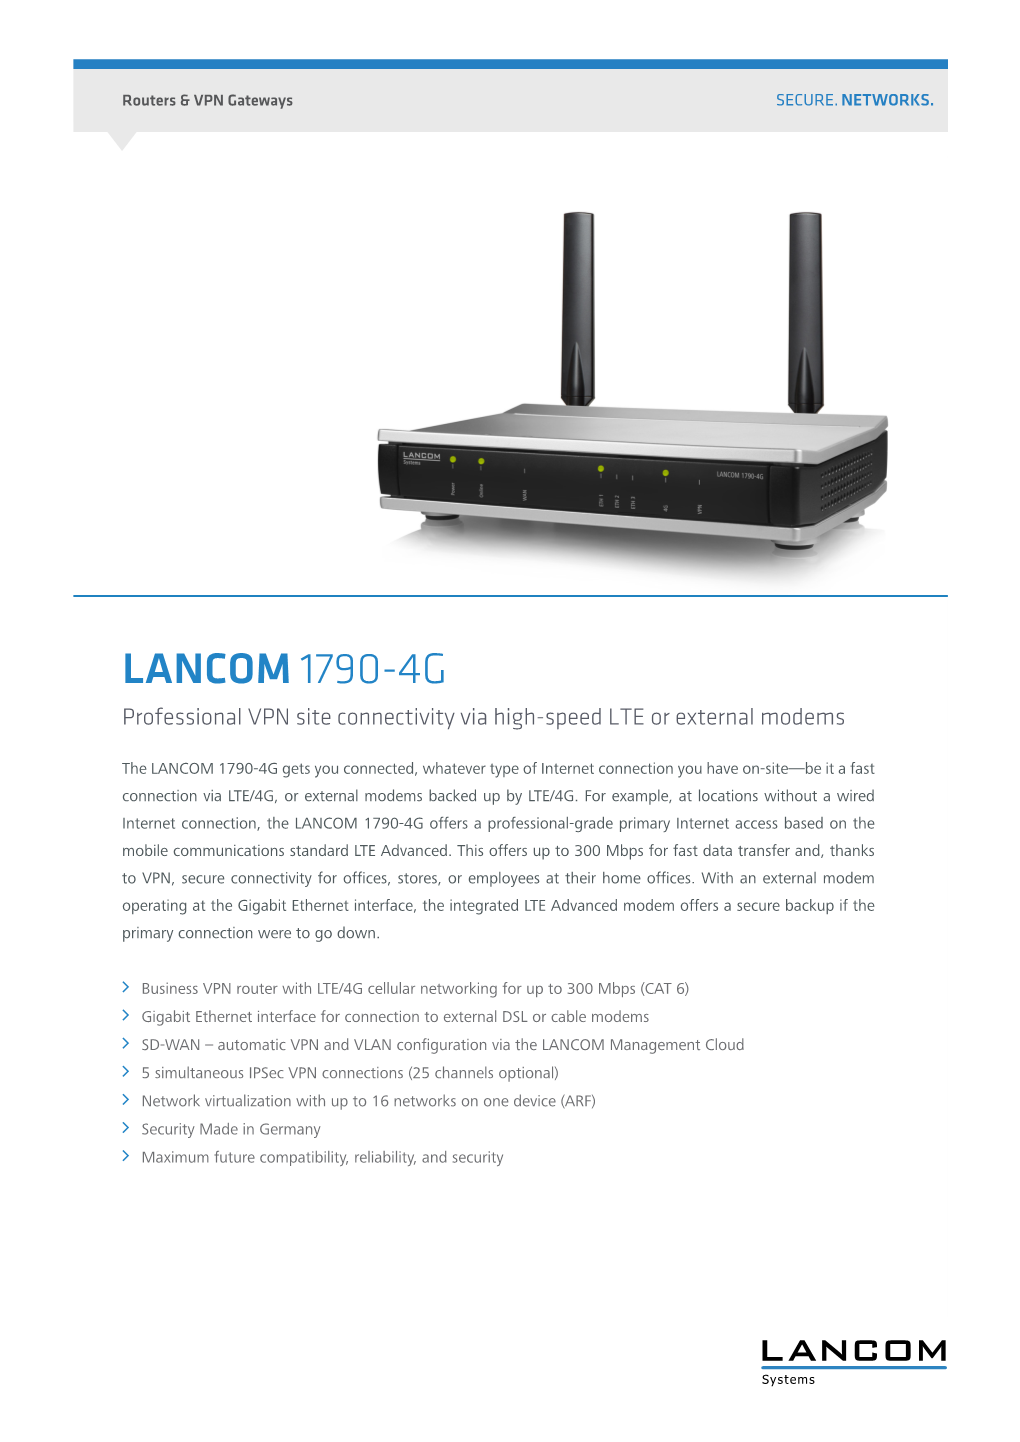 LANCOM 1790-4G Professional VPN Site Connectivity Via High-Speed LTE Or External Modems